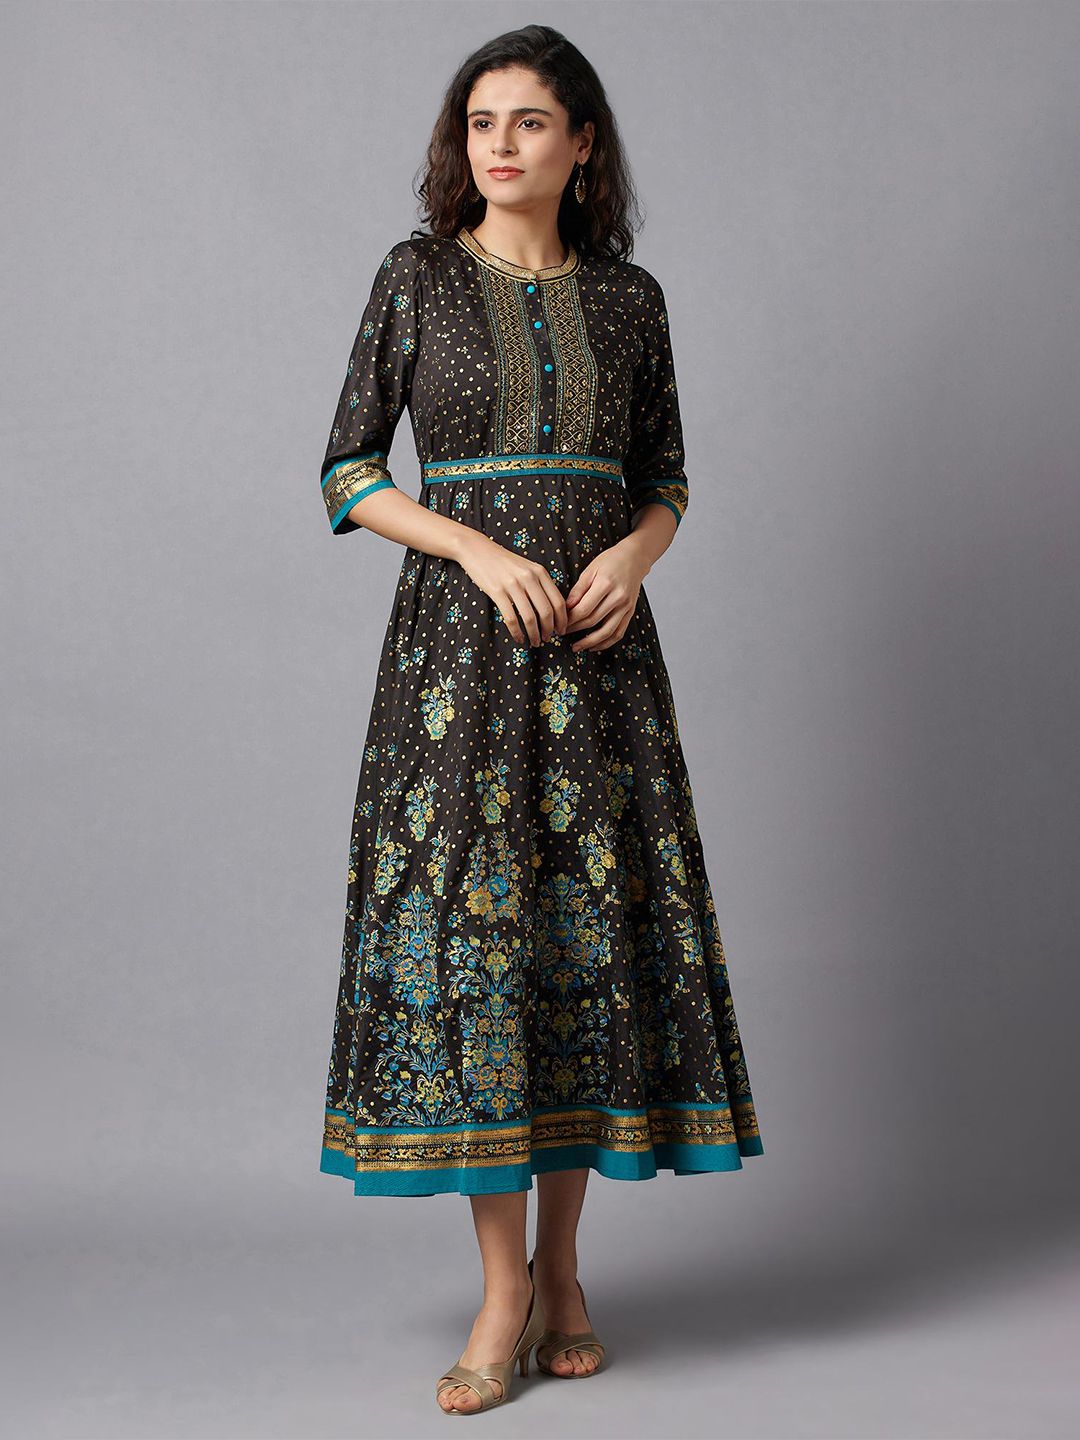 AURELIA Women Black & Gold-Toned Embellished A-Line Midi Dress Price in India